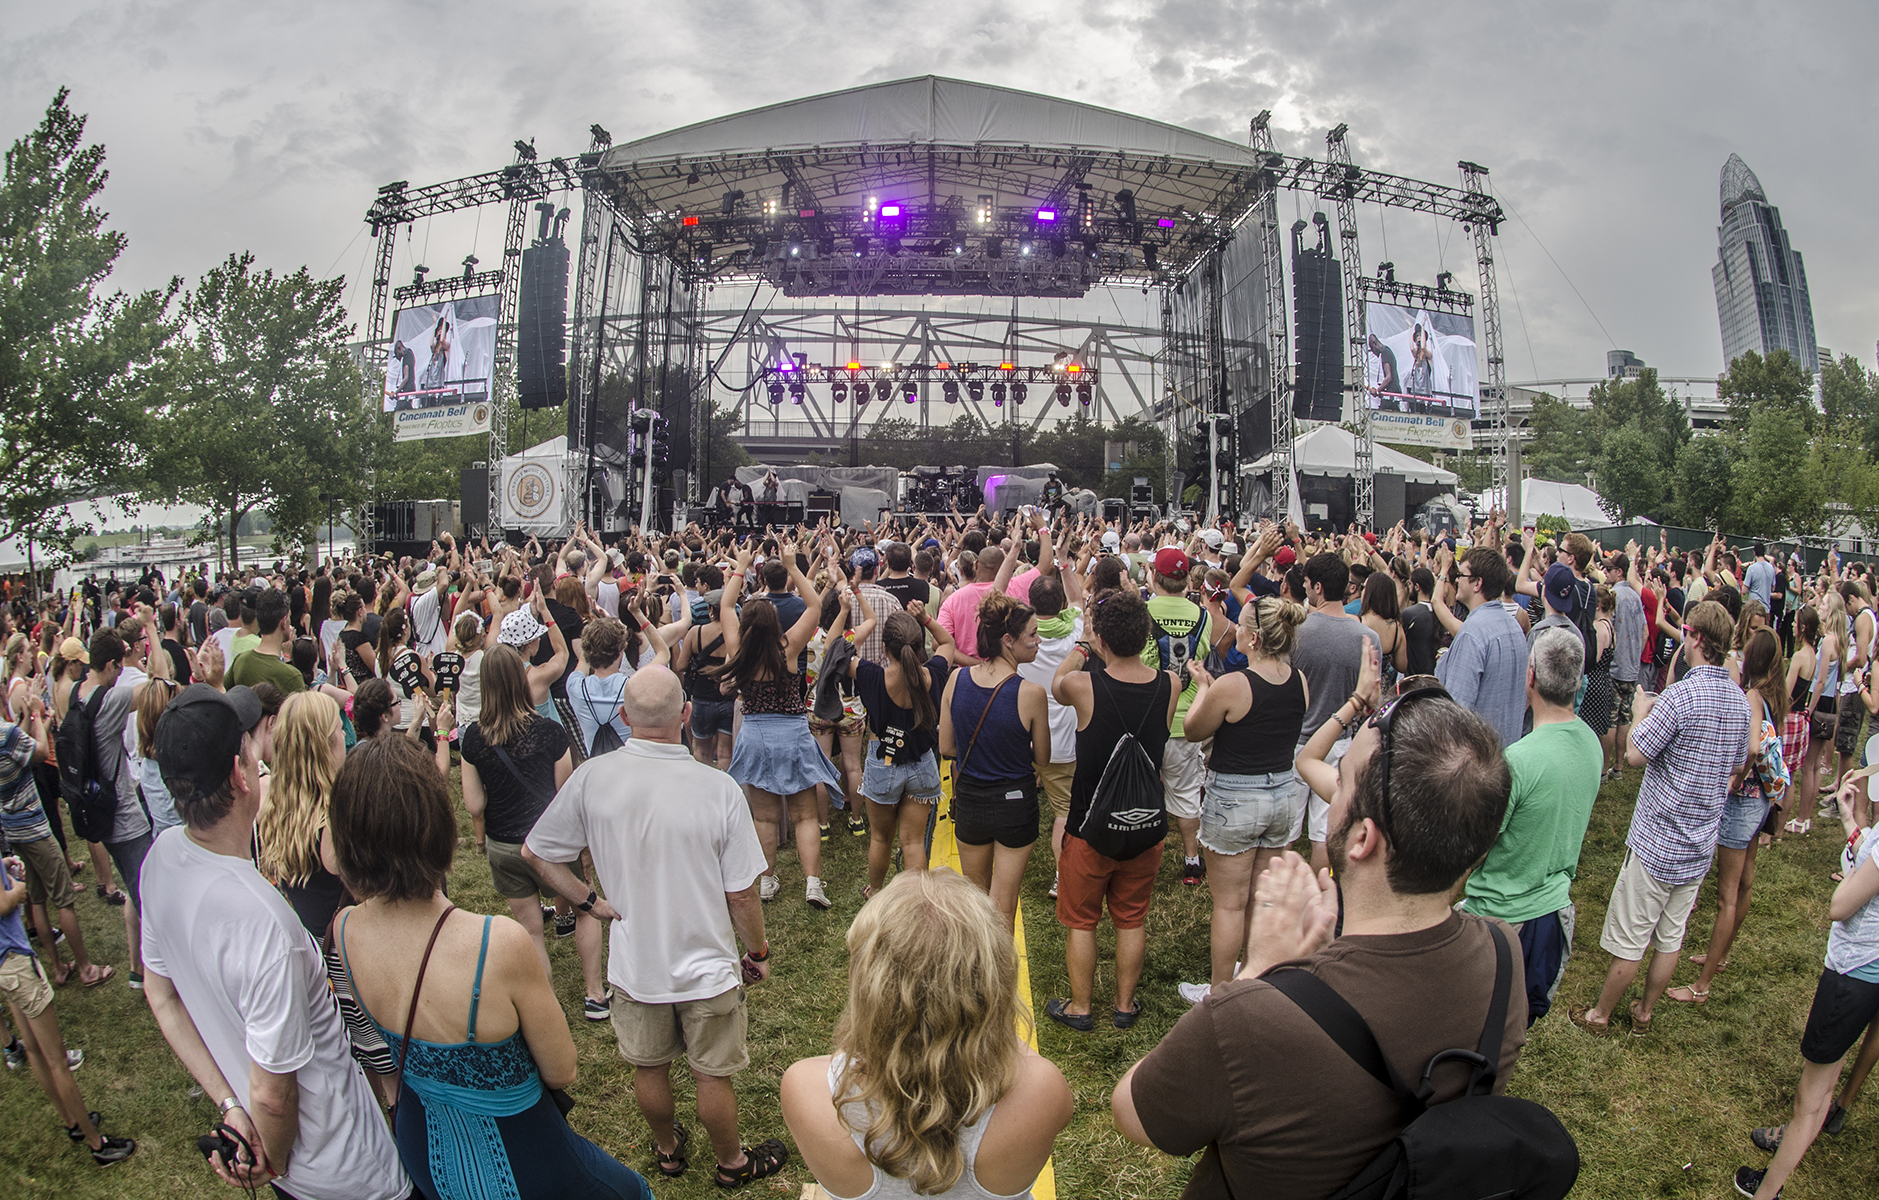 Coronavirus: Bunbury Music Festival in Cincinnati canceled